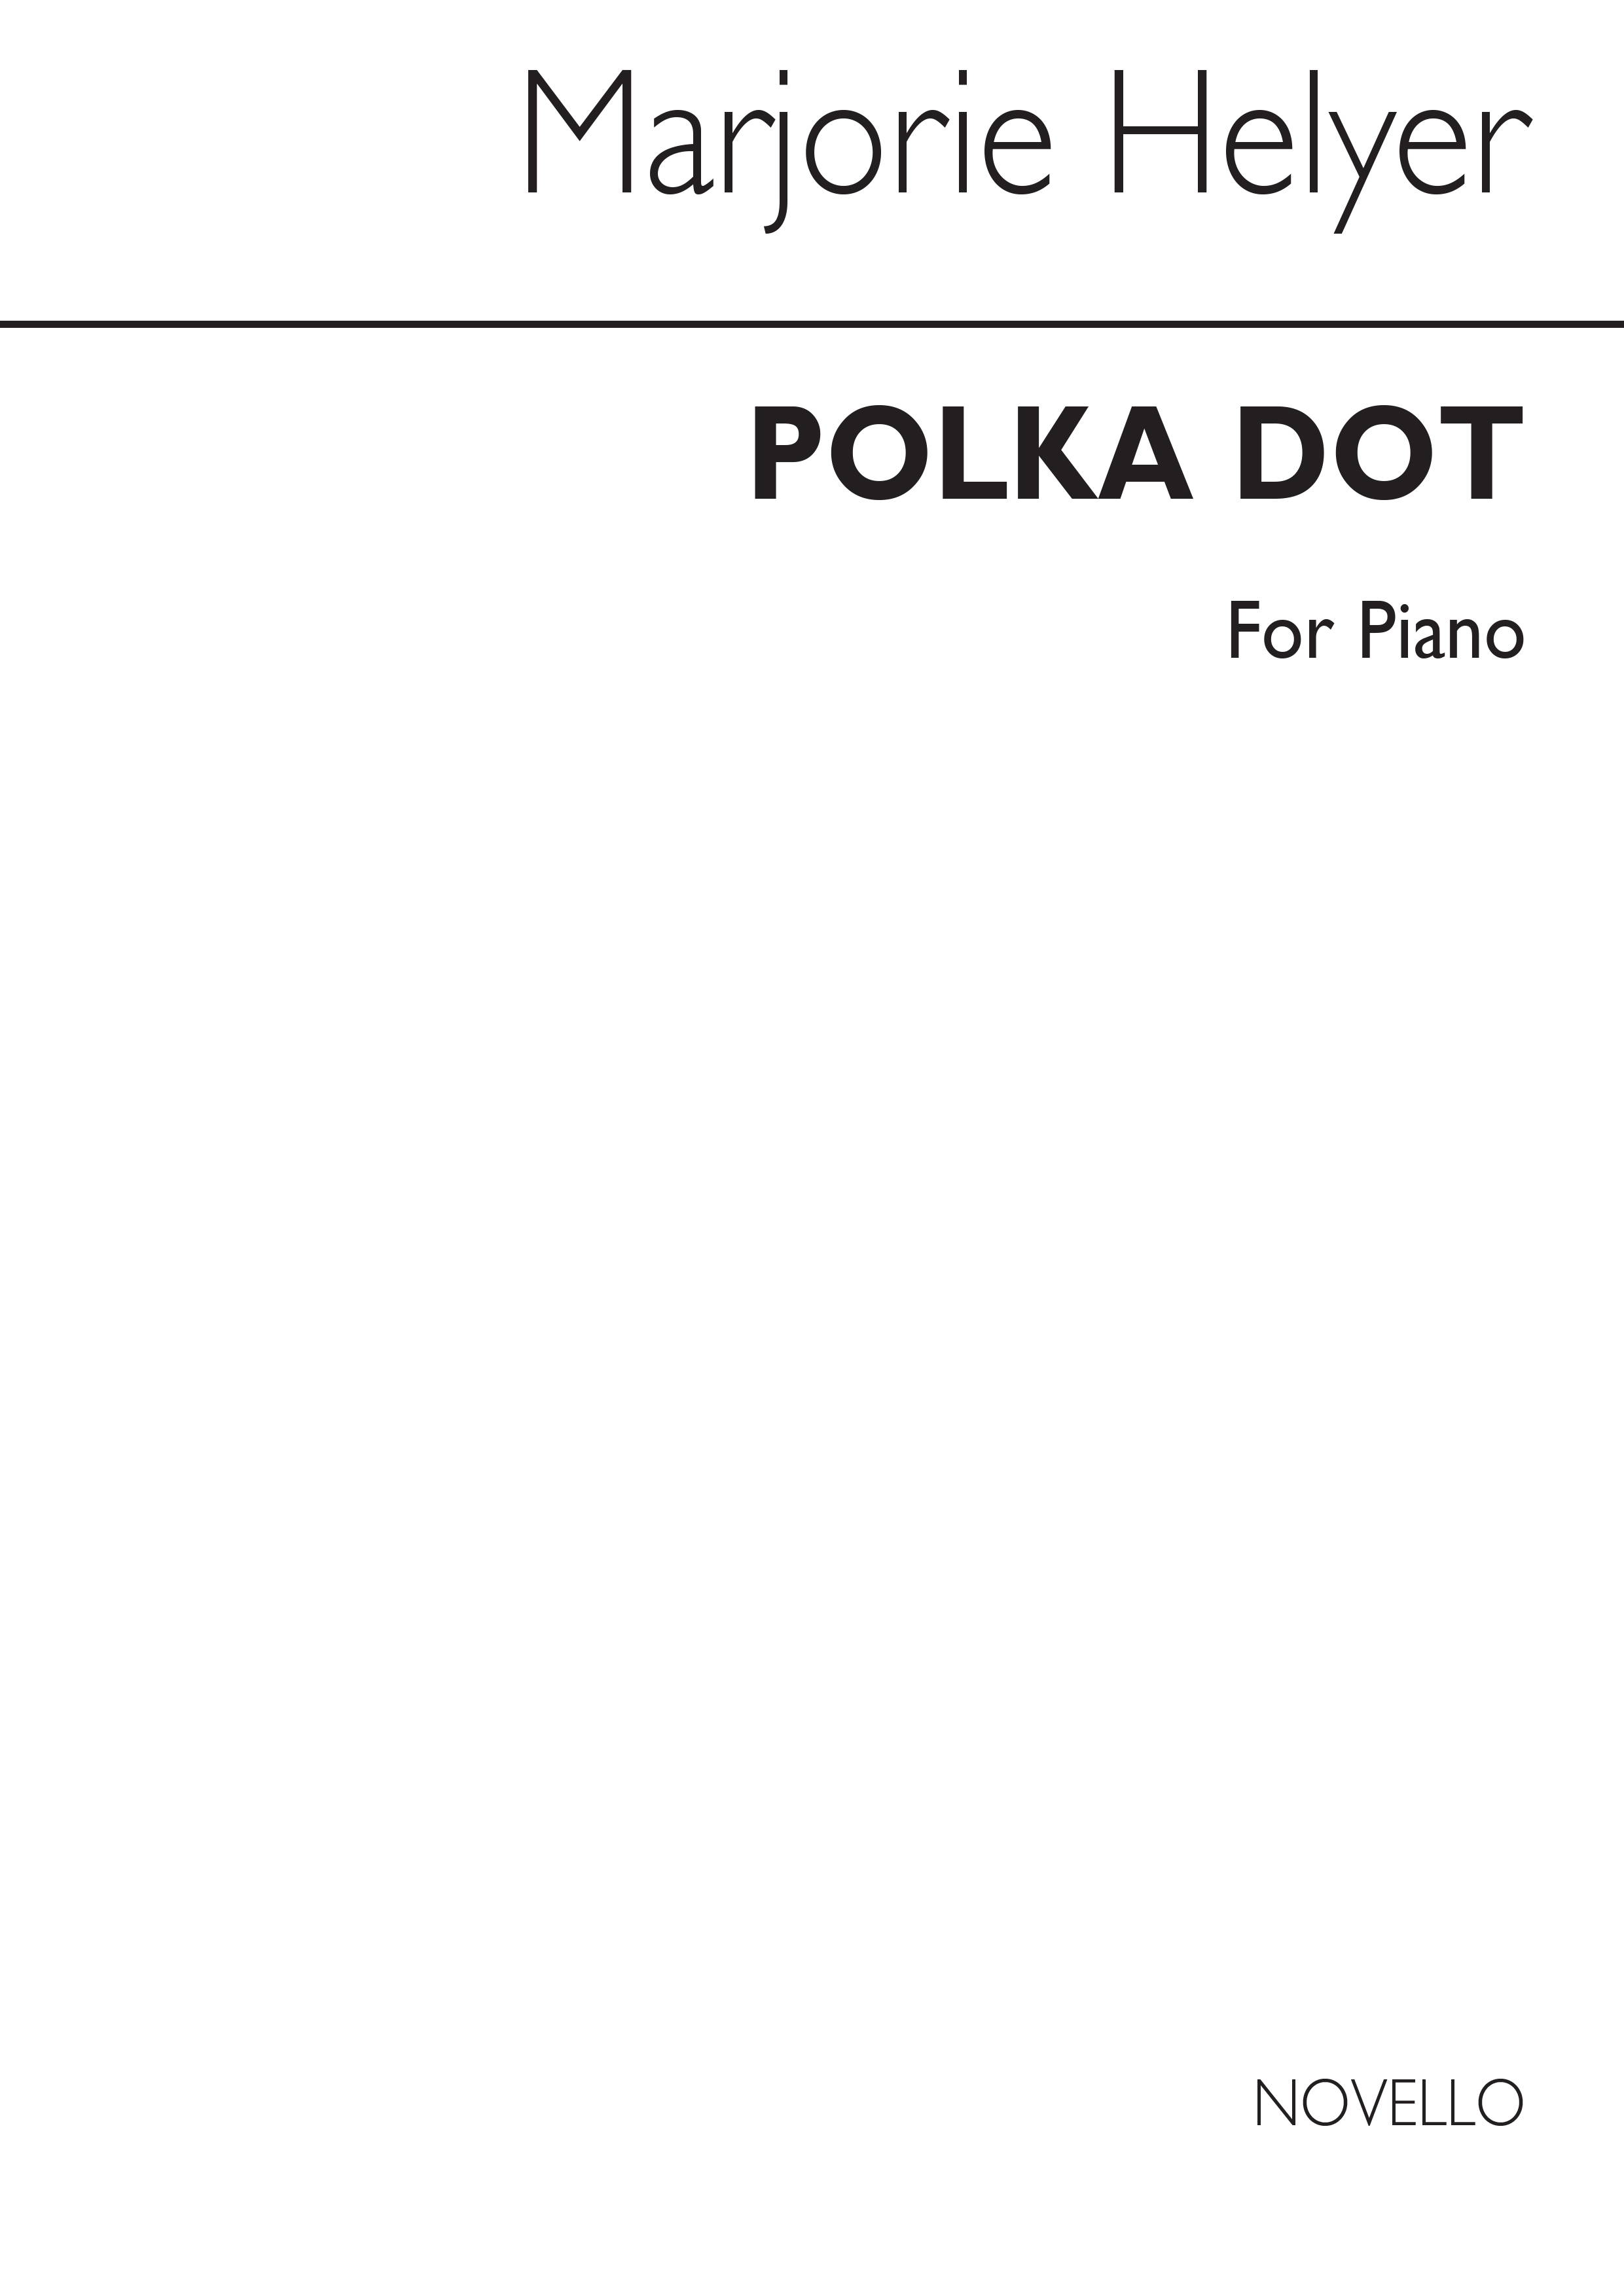 Helyer: Polka Dot for Piano